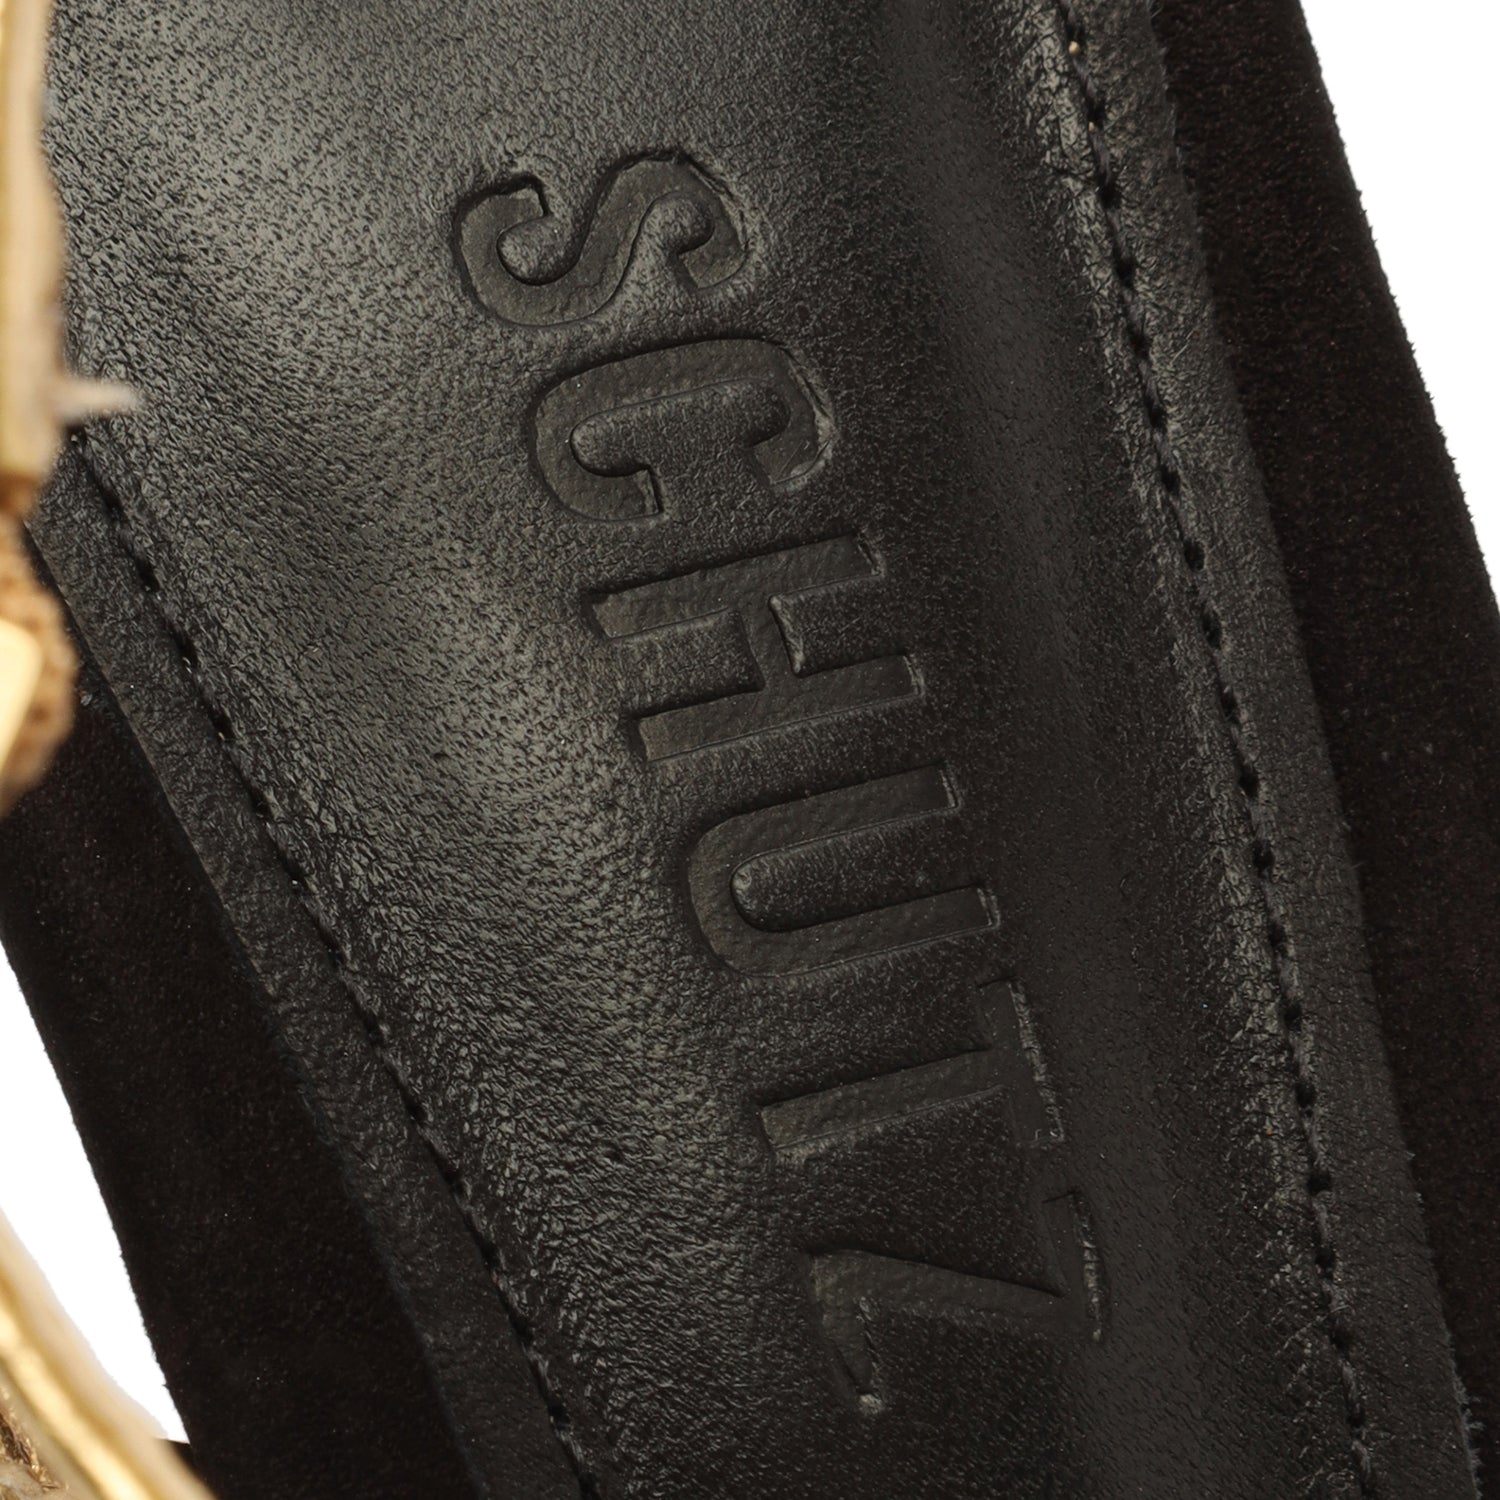 Claudia Metallic Leather Sandal Sandals Open Stock    - Schutz Shoes